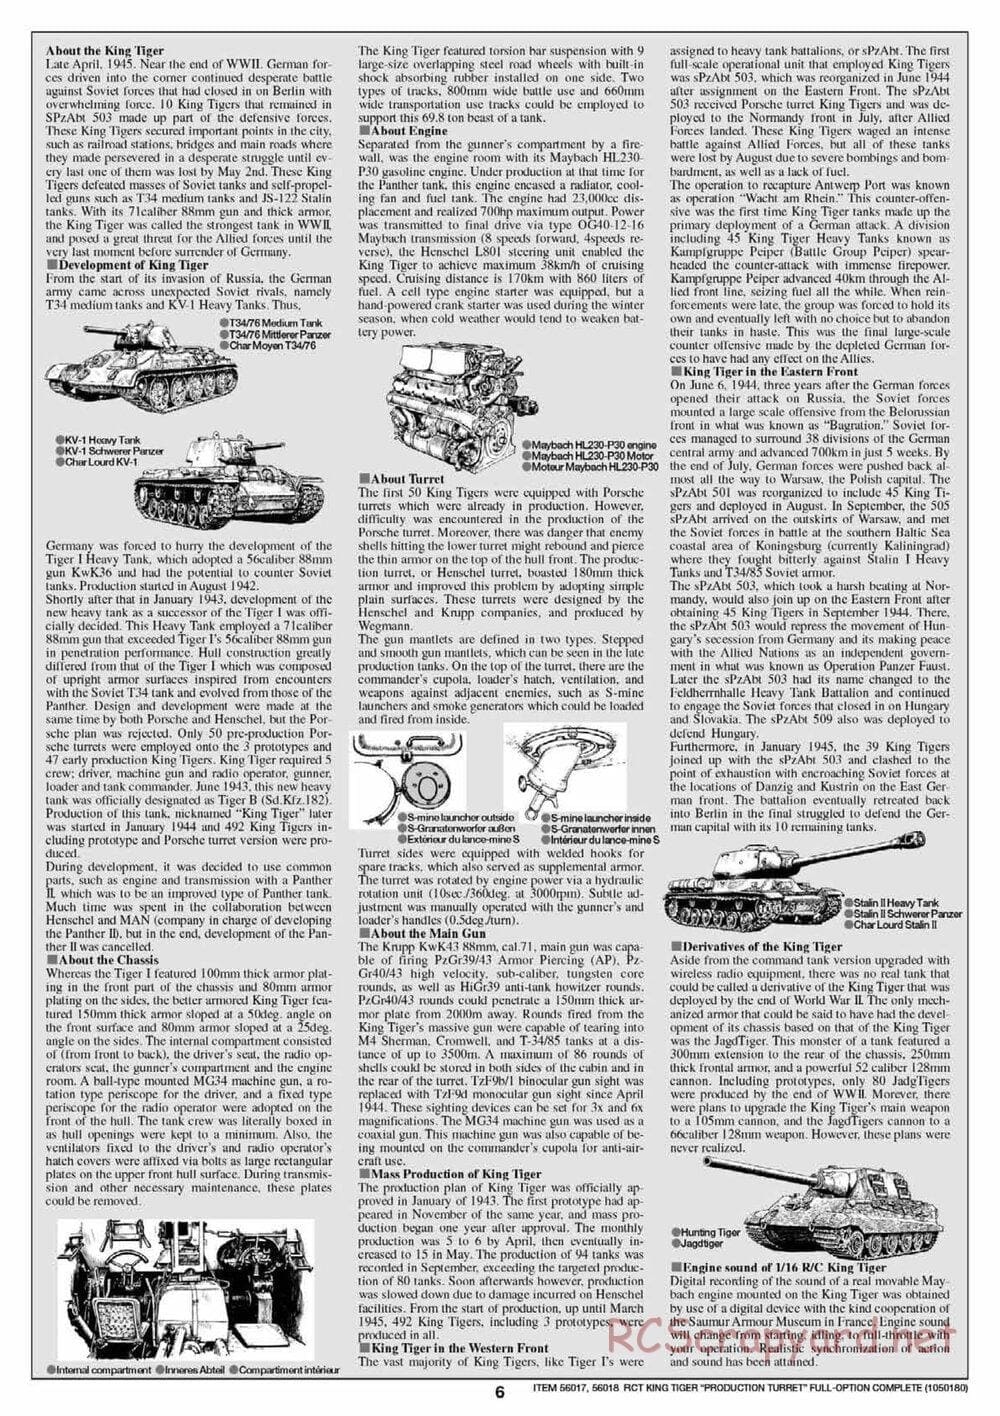 Tamiya - King Tiger - 1/16 Scale Chassis - Manual - Page 6